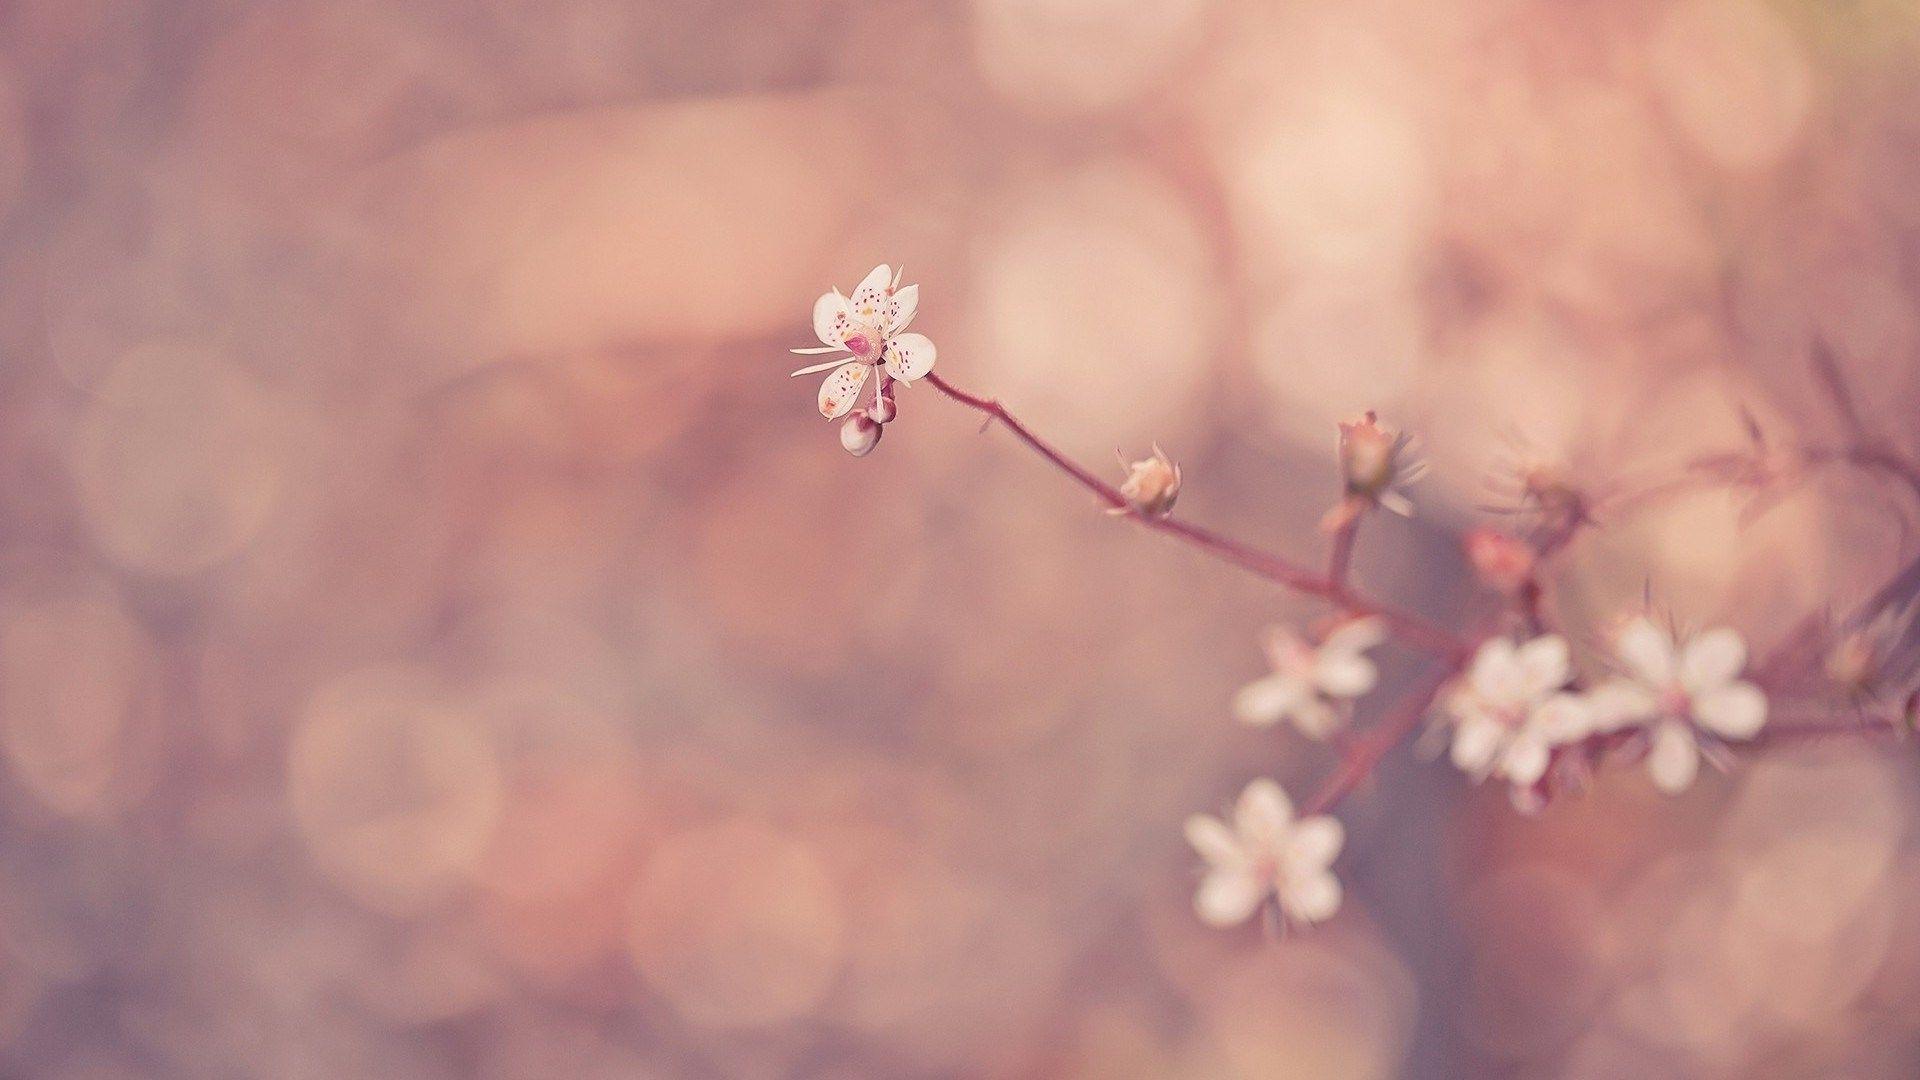 Flower Wallpapers Tumblr